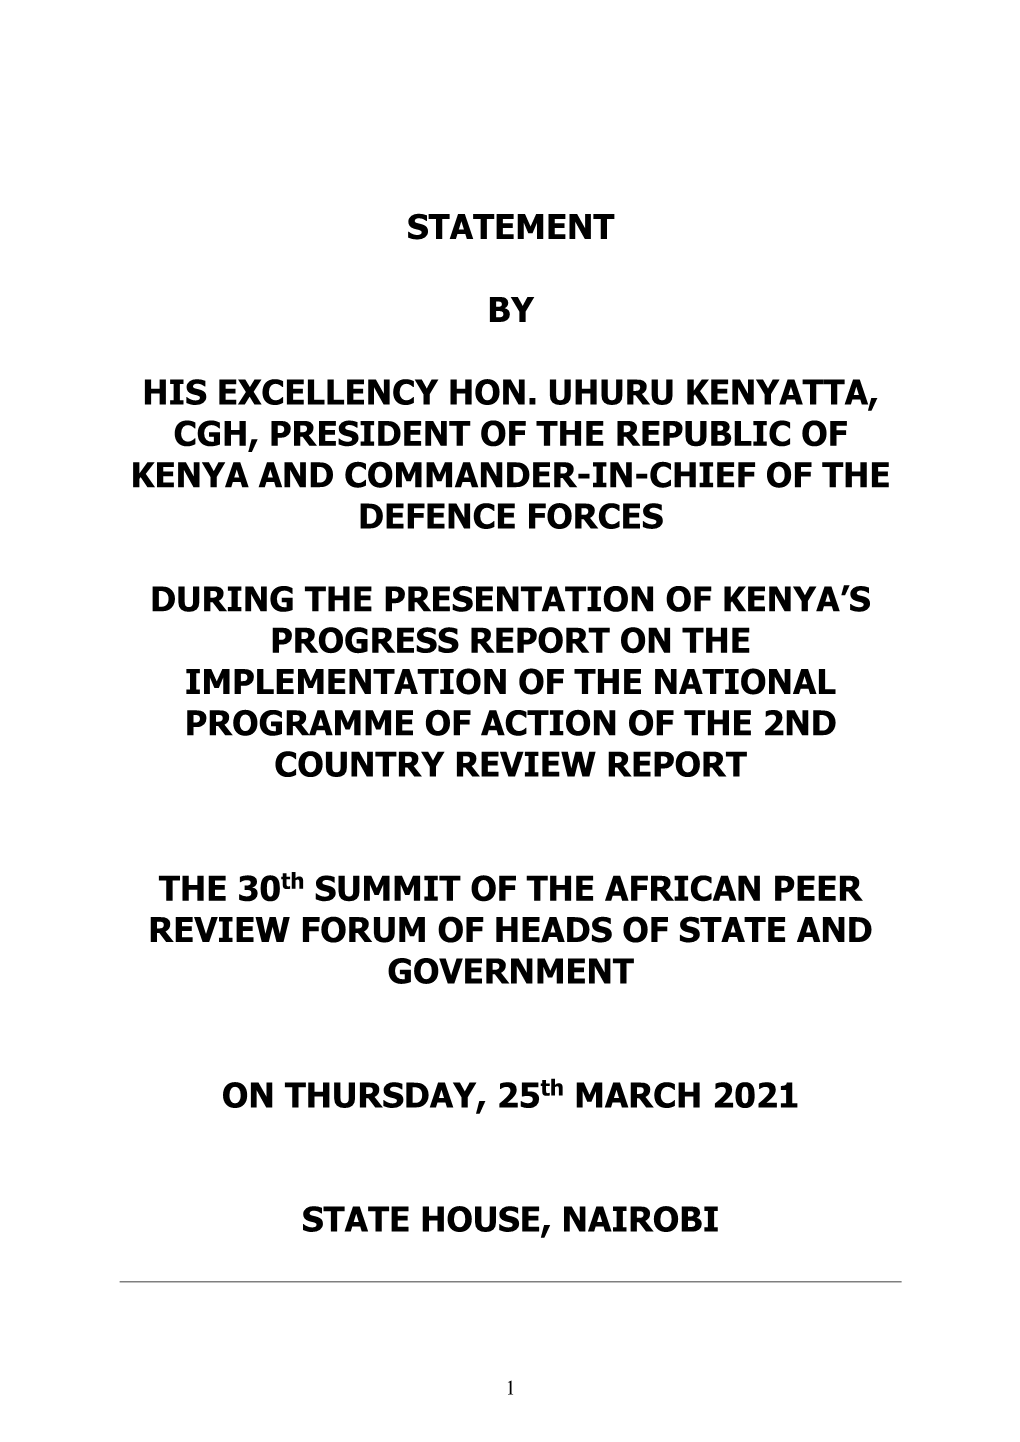 Statement by His Excellency Hon. Uhuru Kenyatta, Cgh